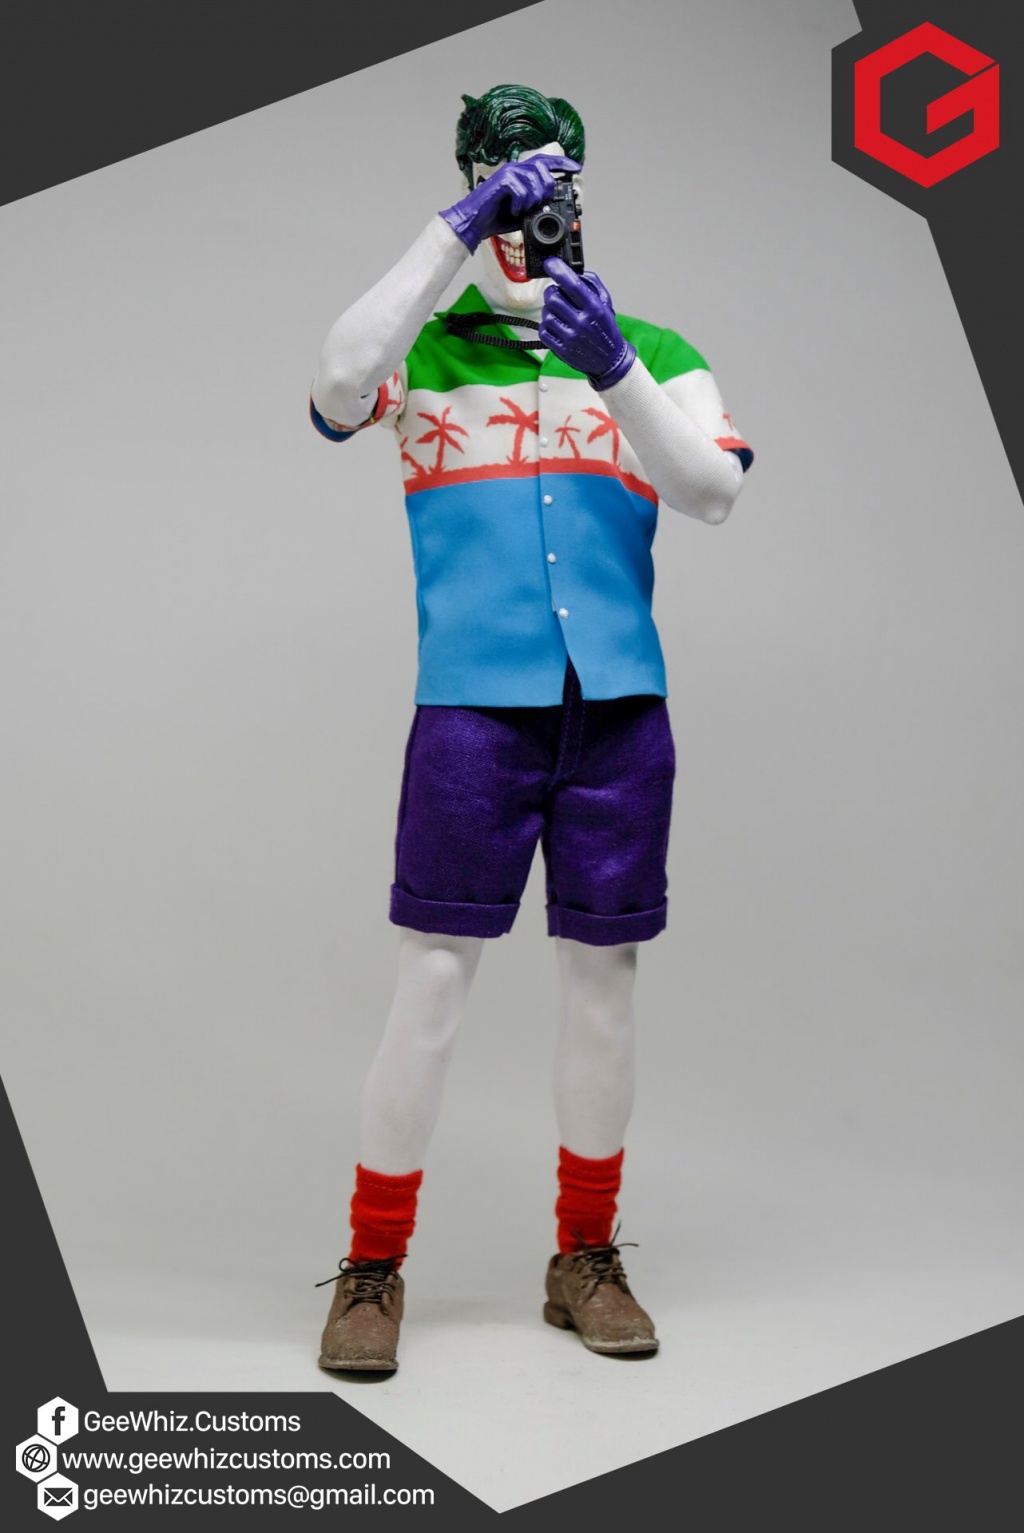 Geewhiz Customs: Joker's Hawaiian Outfit